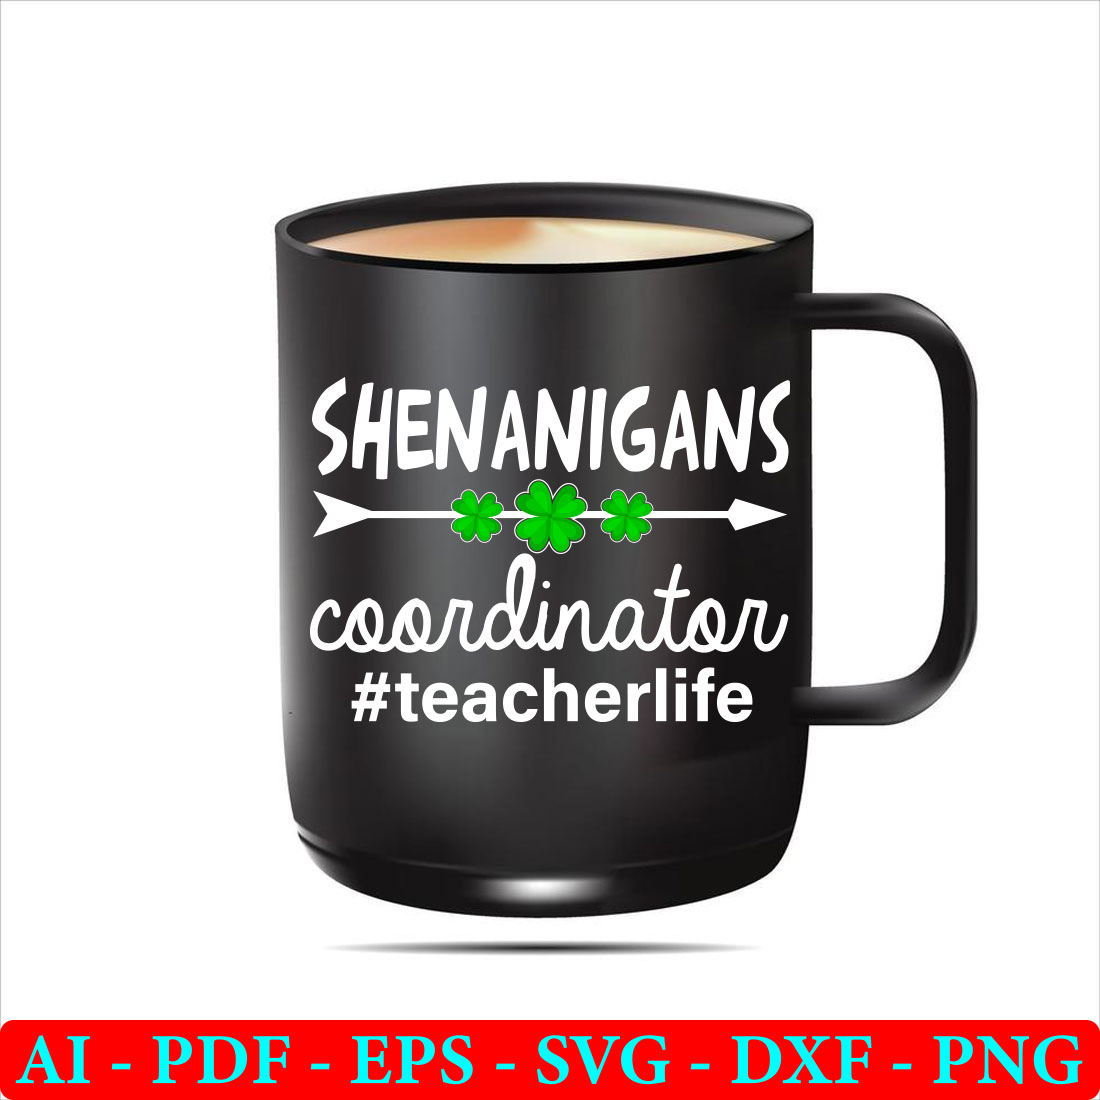 Black coffee mug with the words shenangans cogniator teacher life.